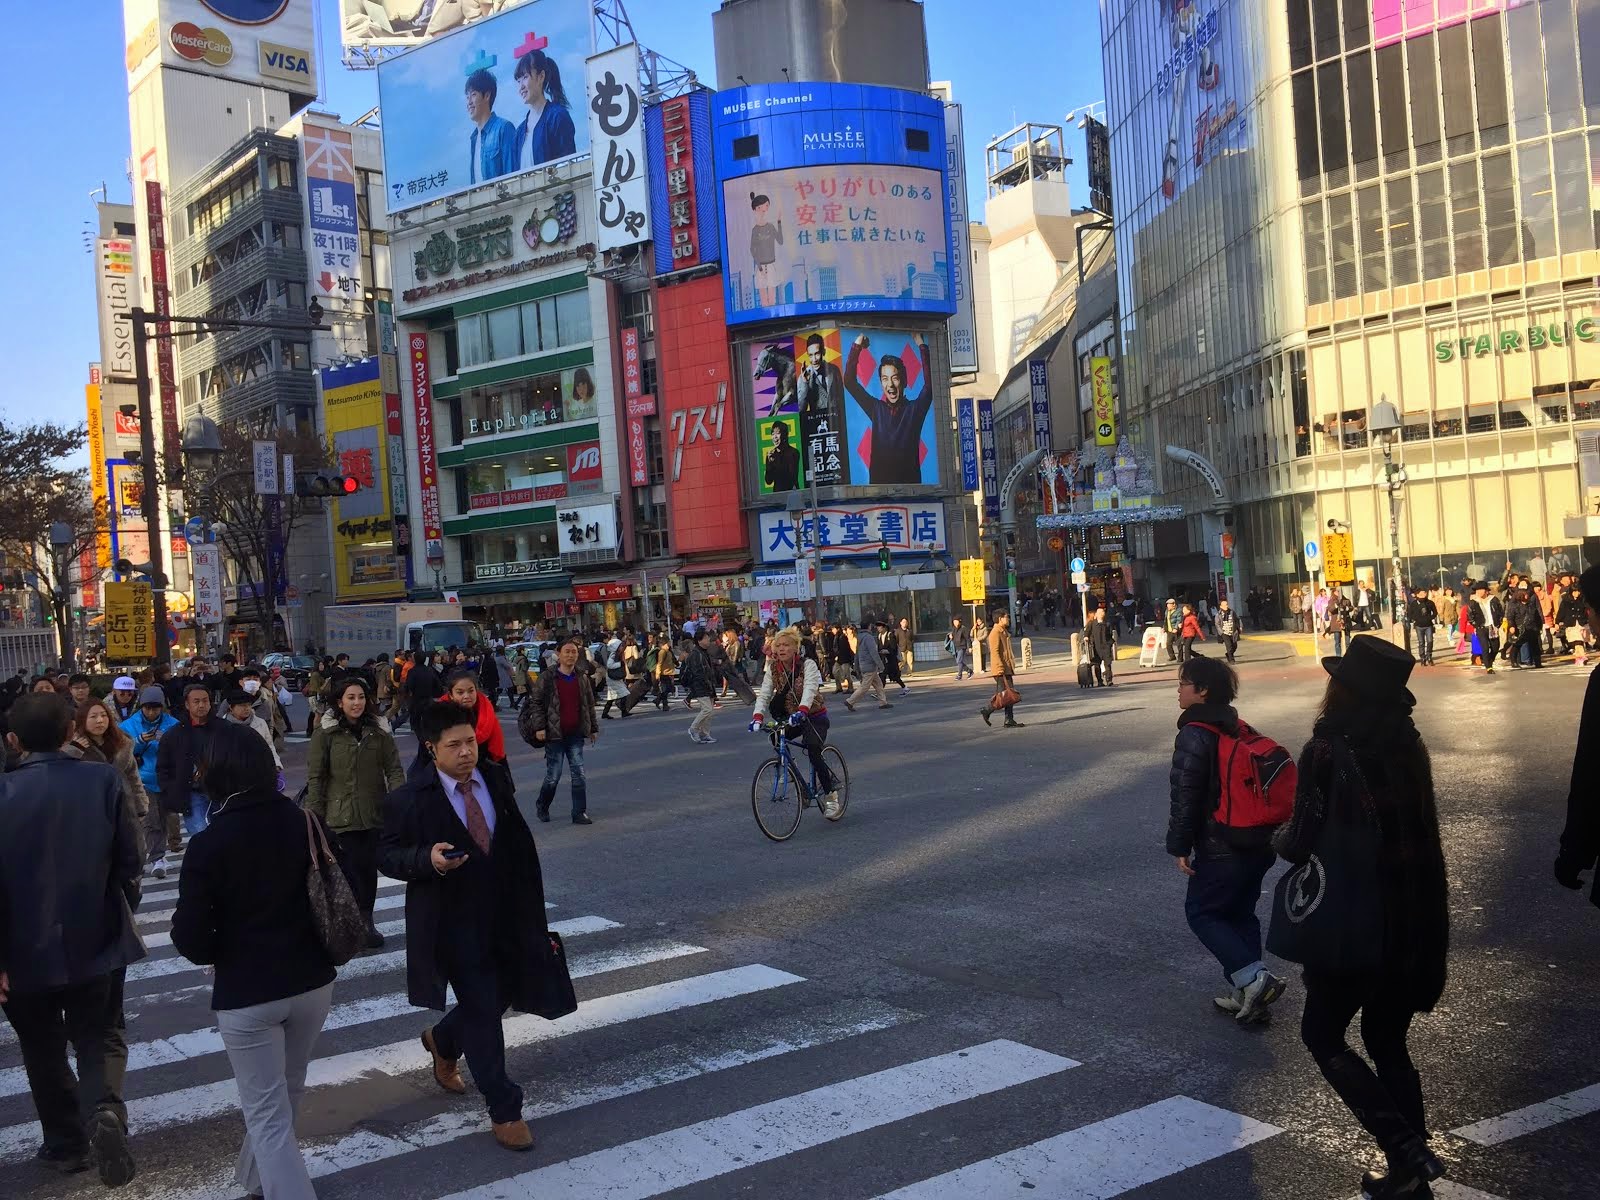 Fukubukuro, Japan 2015 - Crazy for Shopping during the New Year!